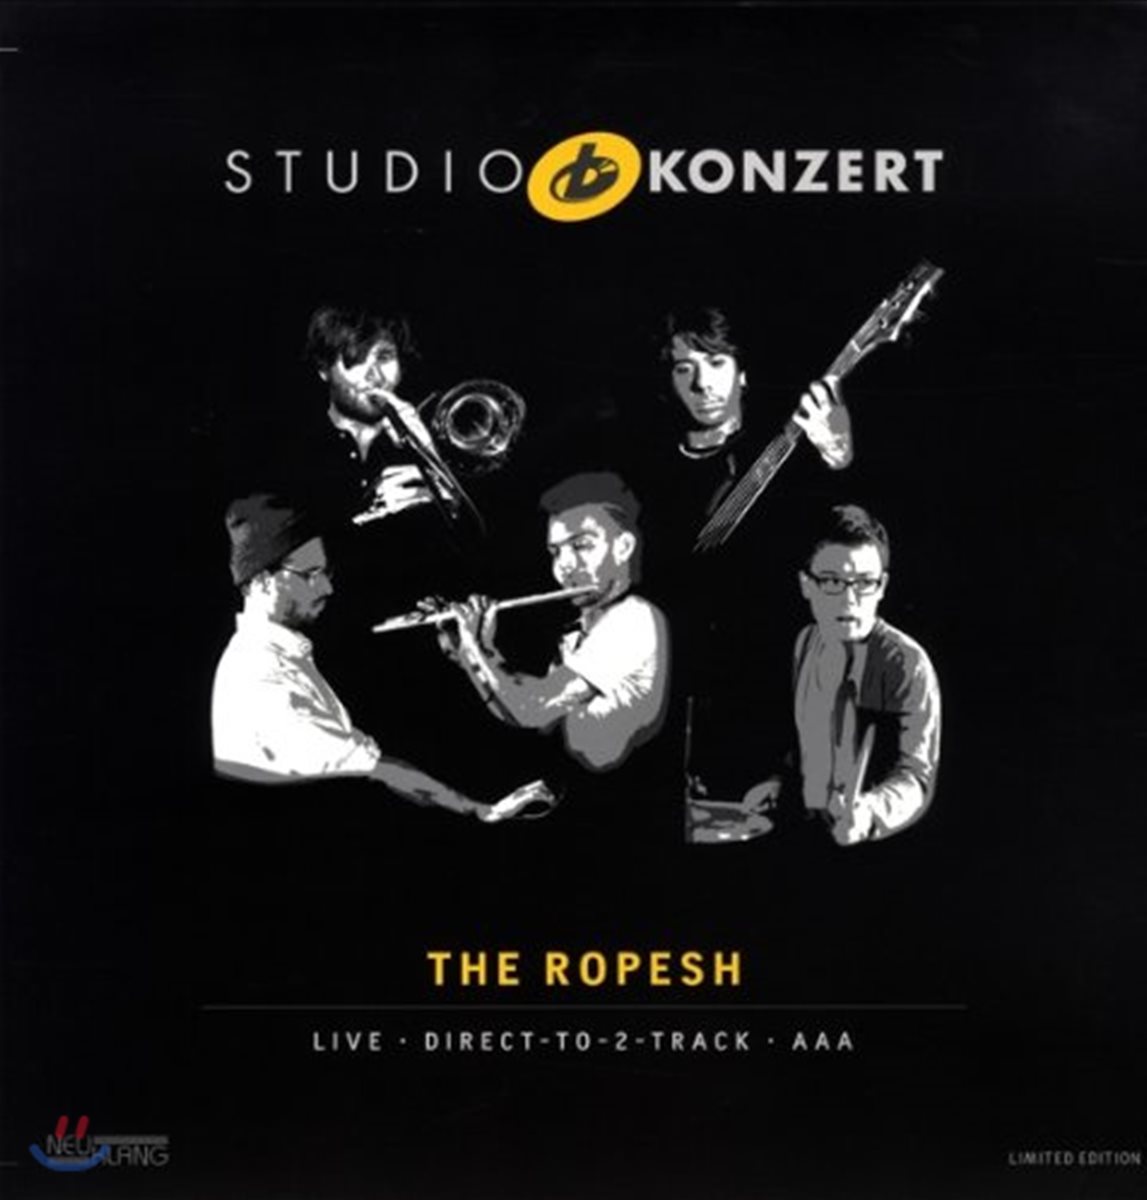 The Ropesh - Studio Konzert 로페슈 - 스튜디오 콘서트 [Limited Edition LP]